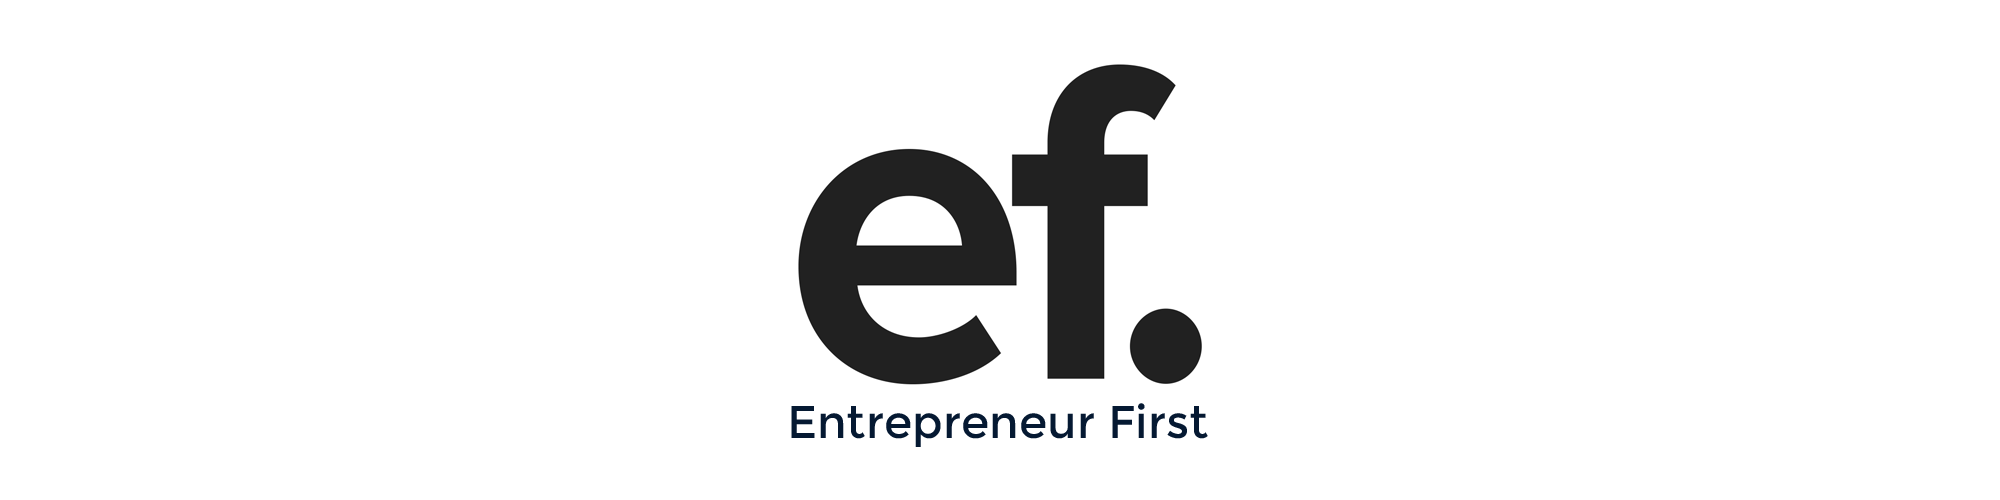 Entrepreneur First (EF)